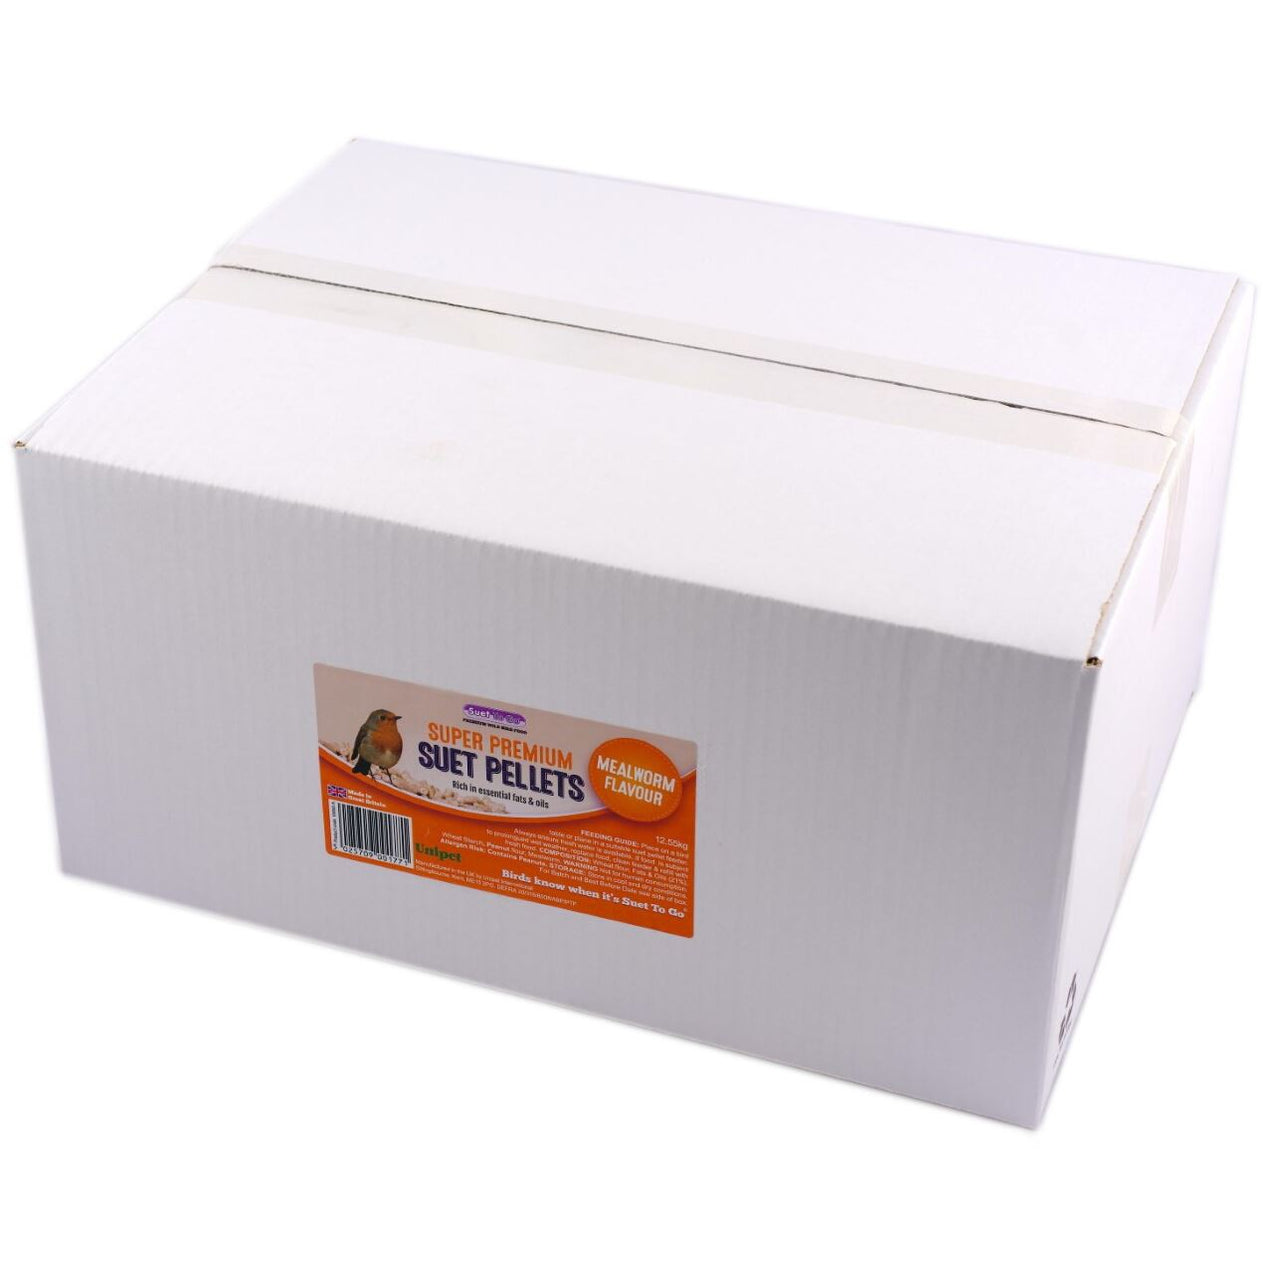 Suet To Go - Suet Pellets Mealworm, 12.55kg Box